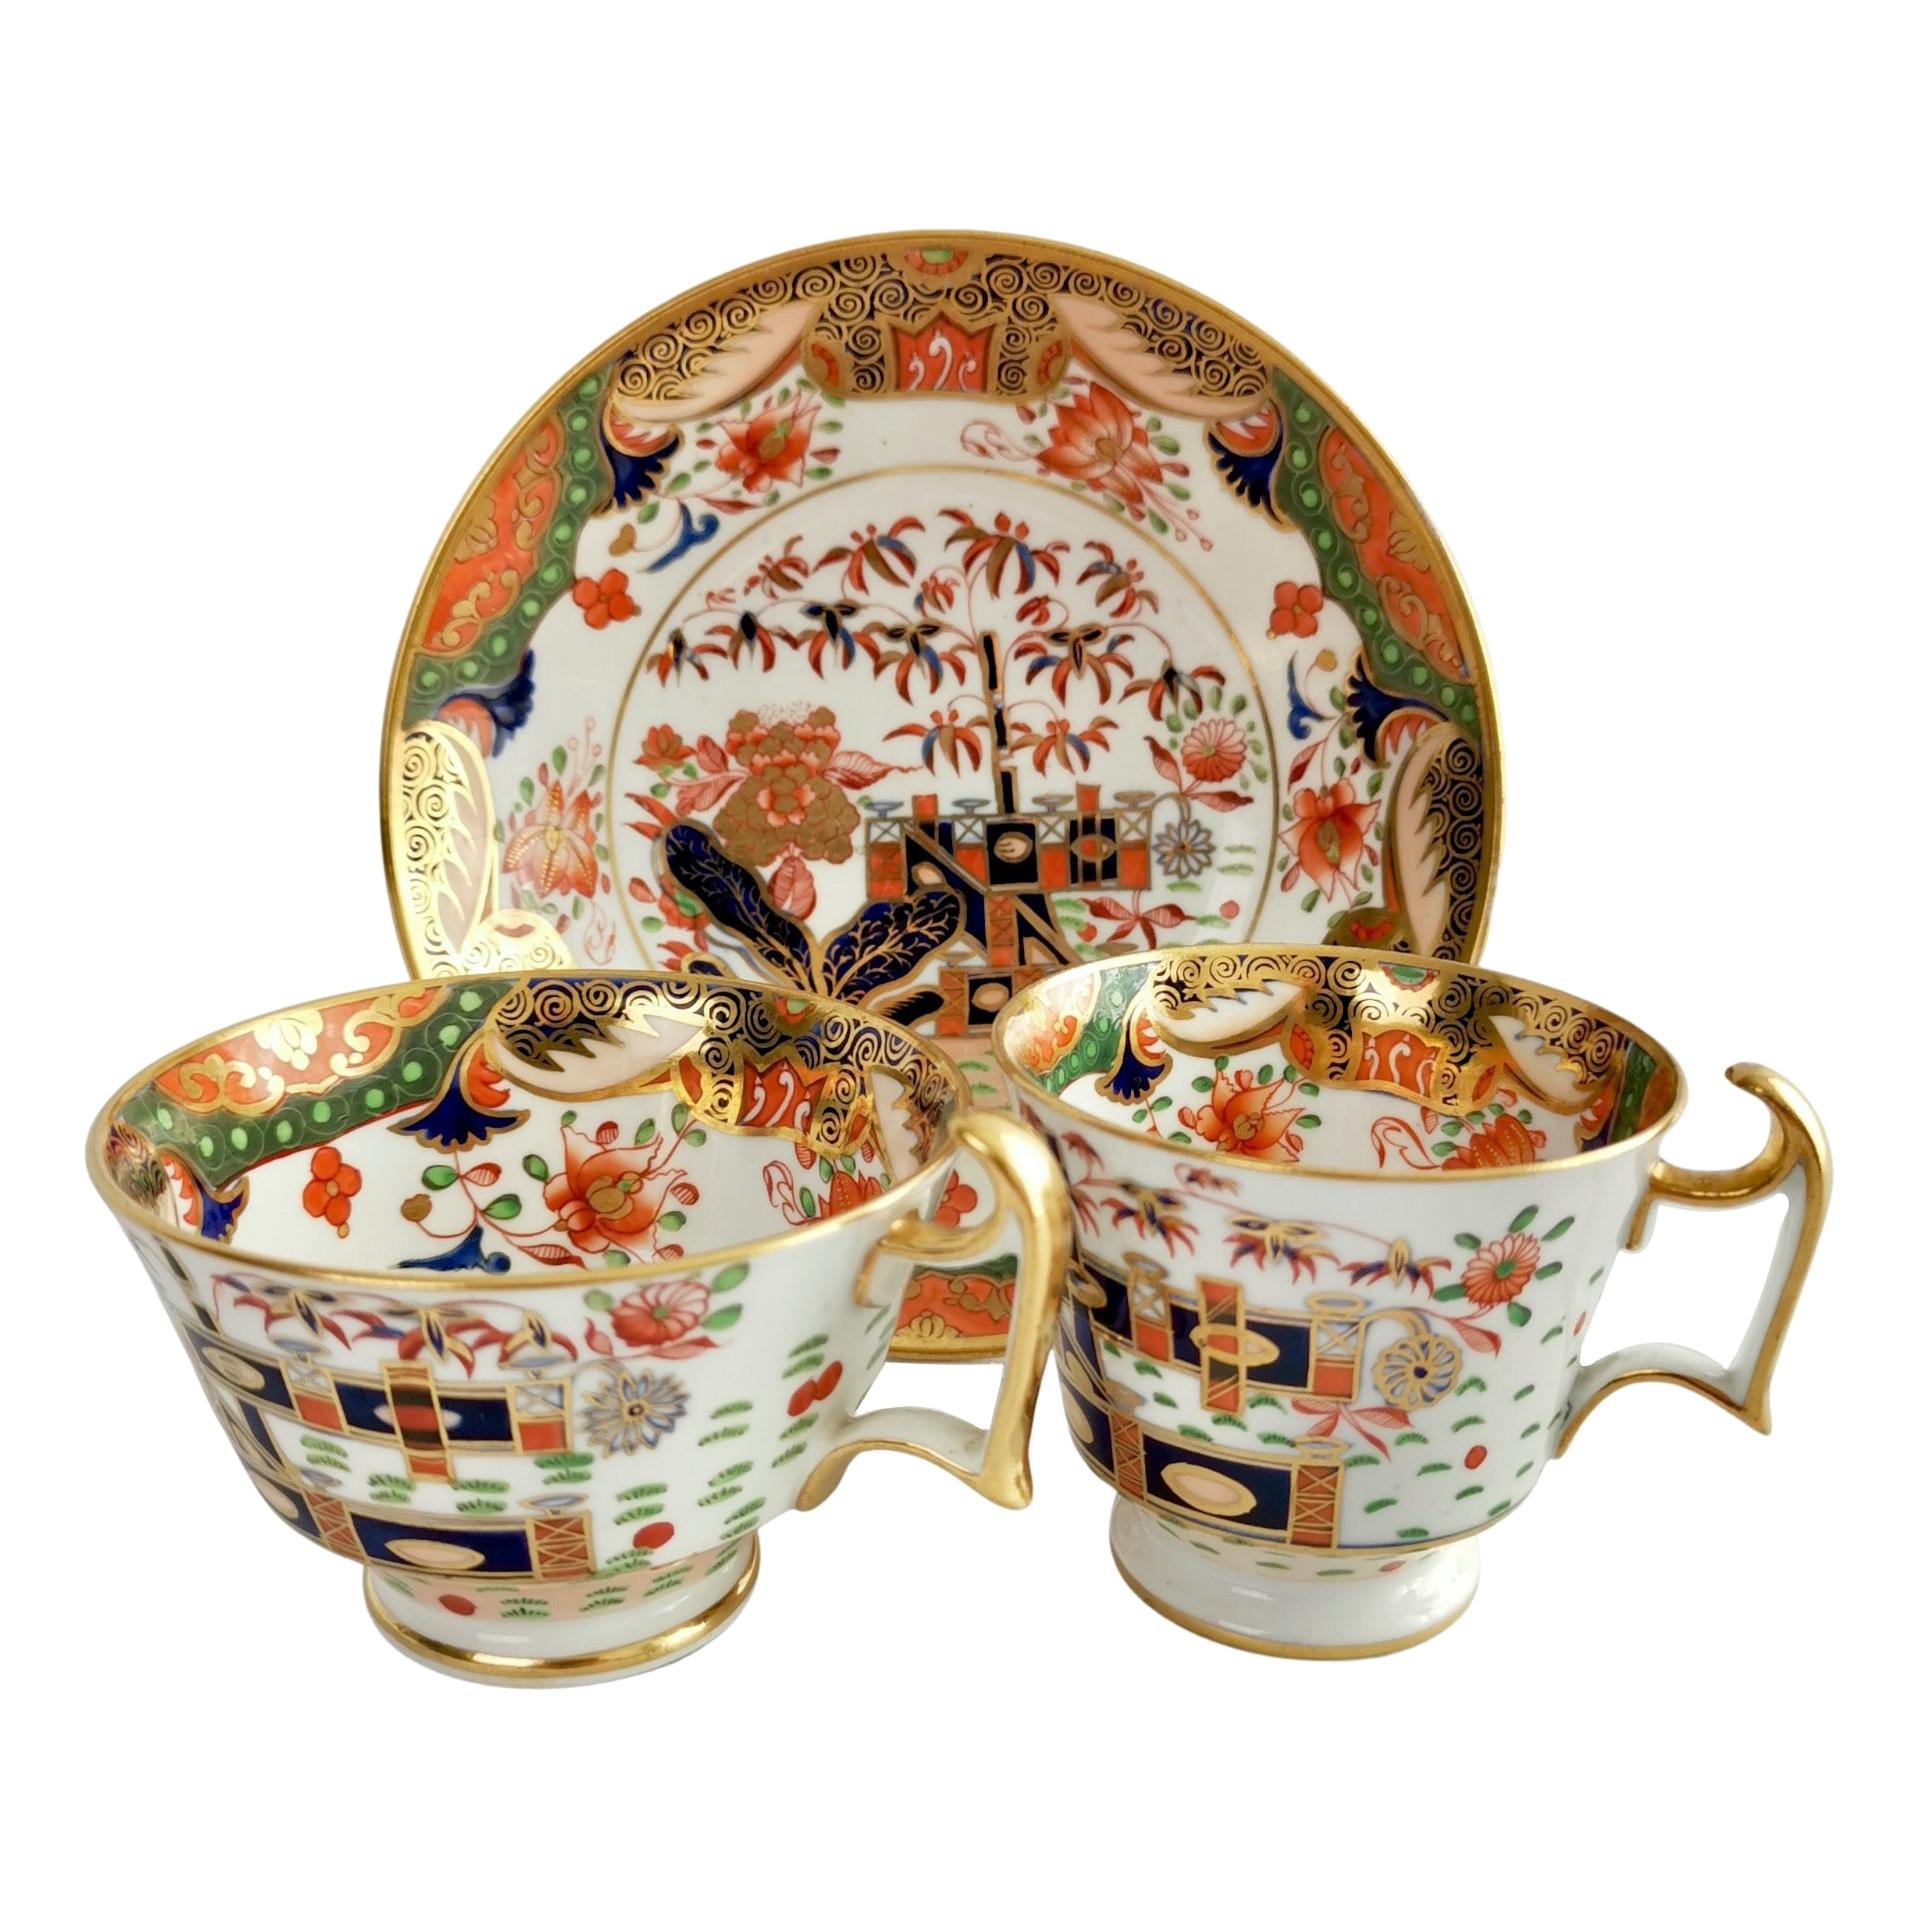 Spode Porcelain Teacup Trio, Imari Tobacco Leaf Patt. 967, Regency ca 1815 '1'